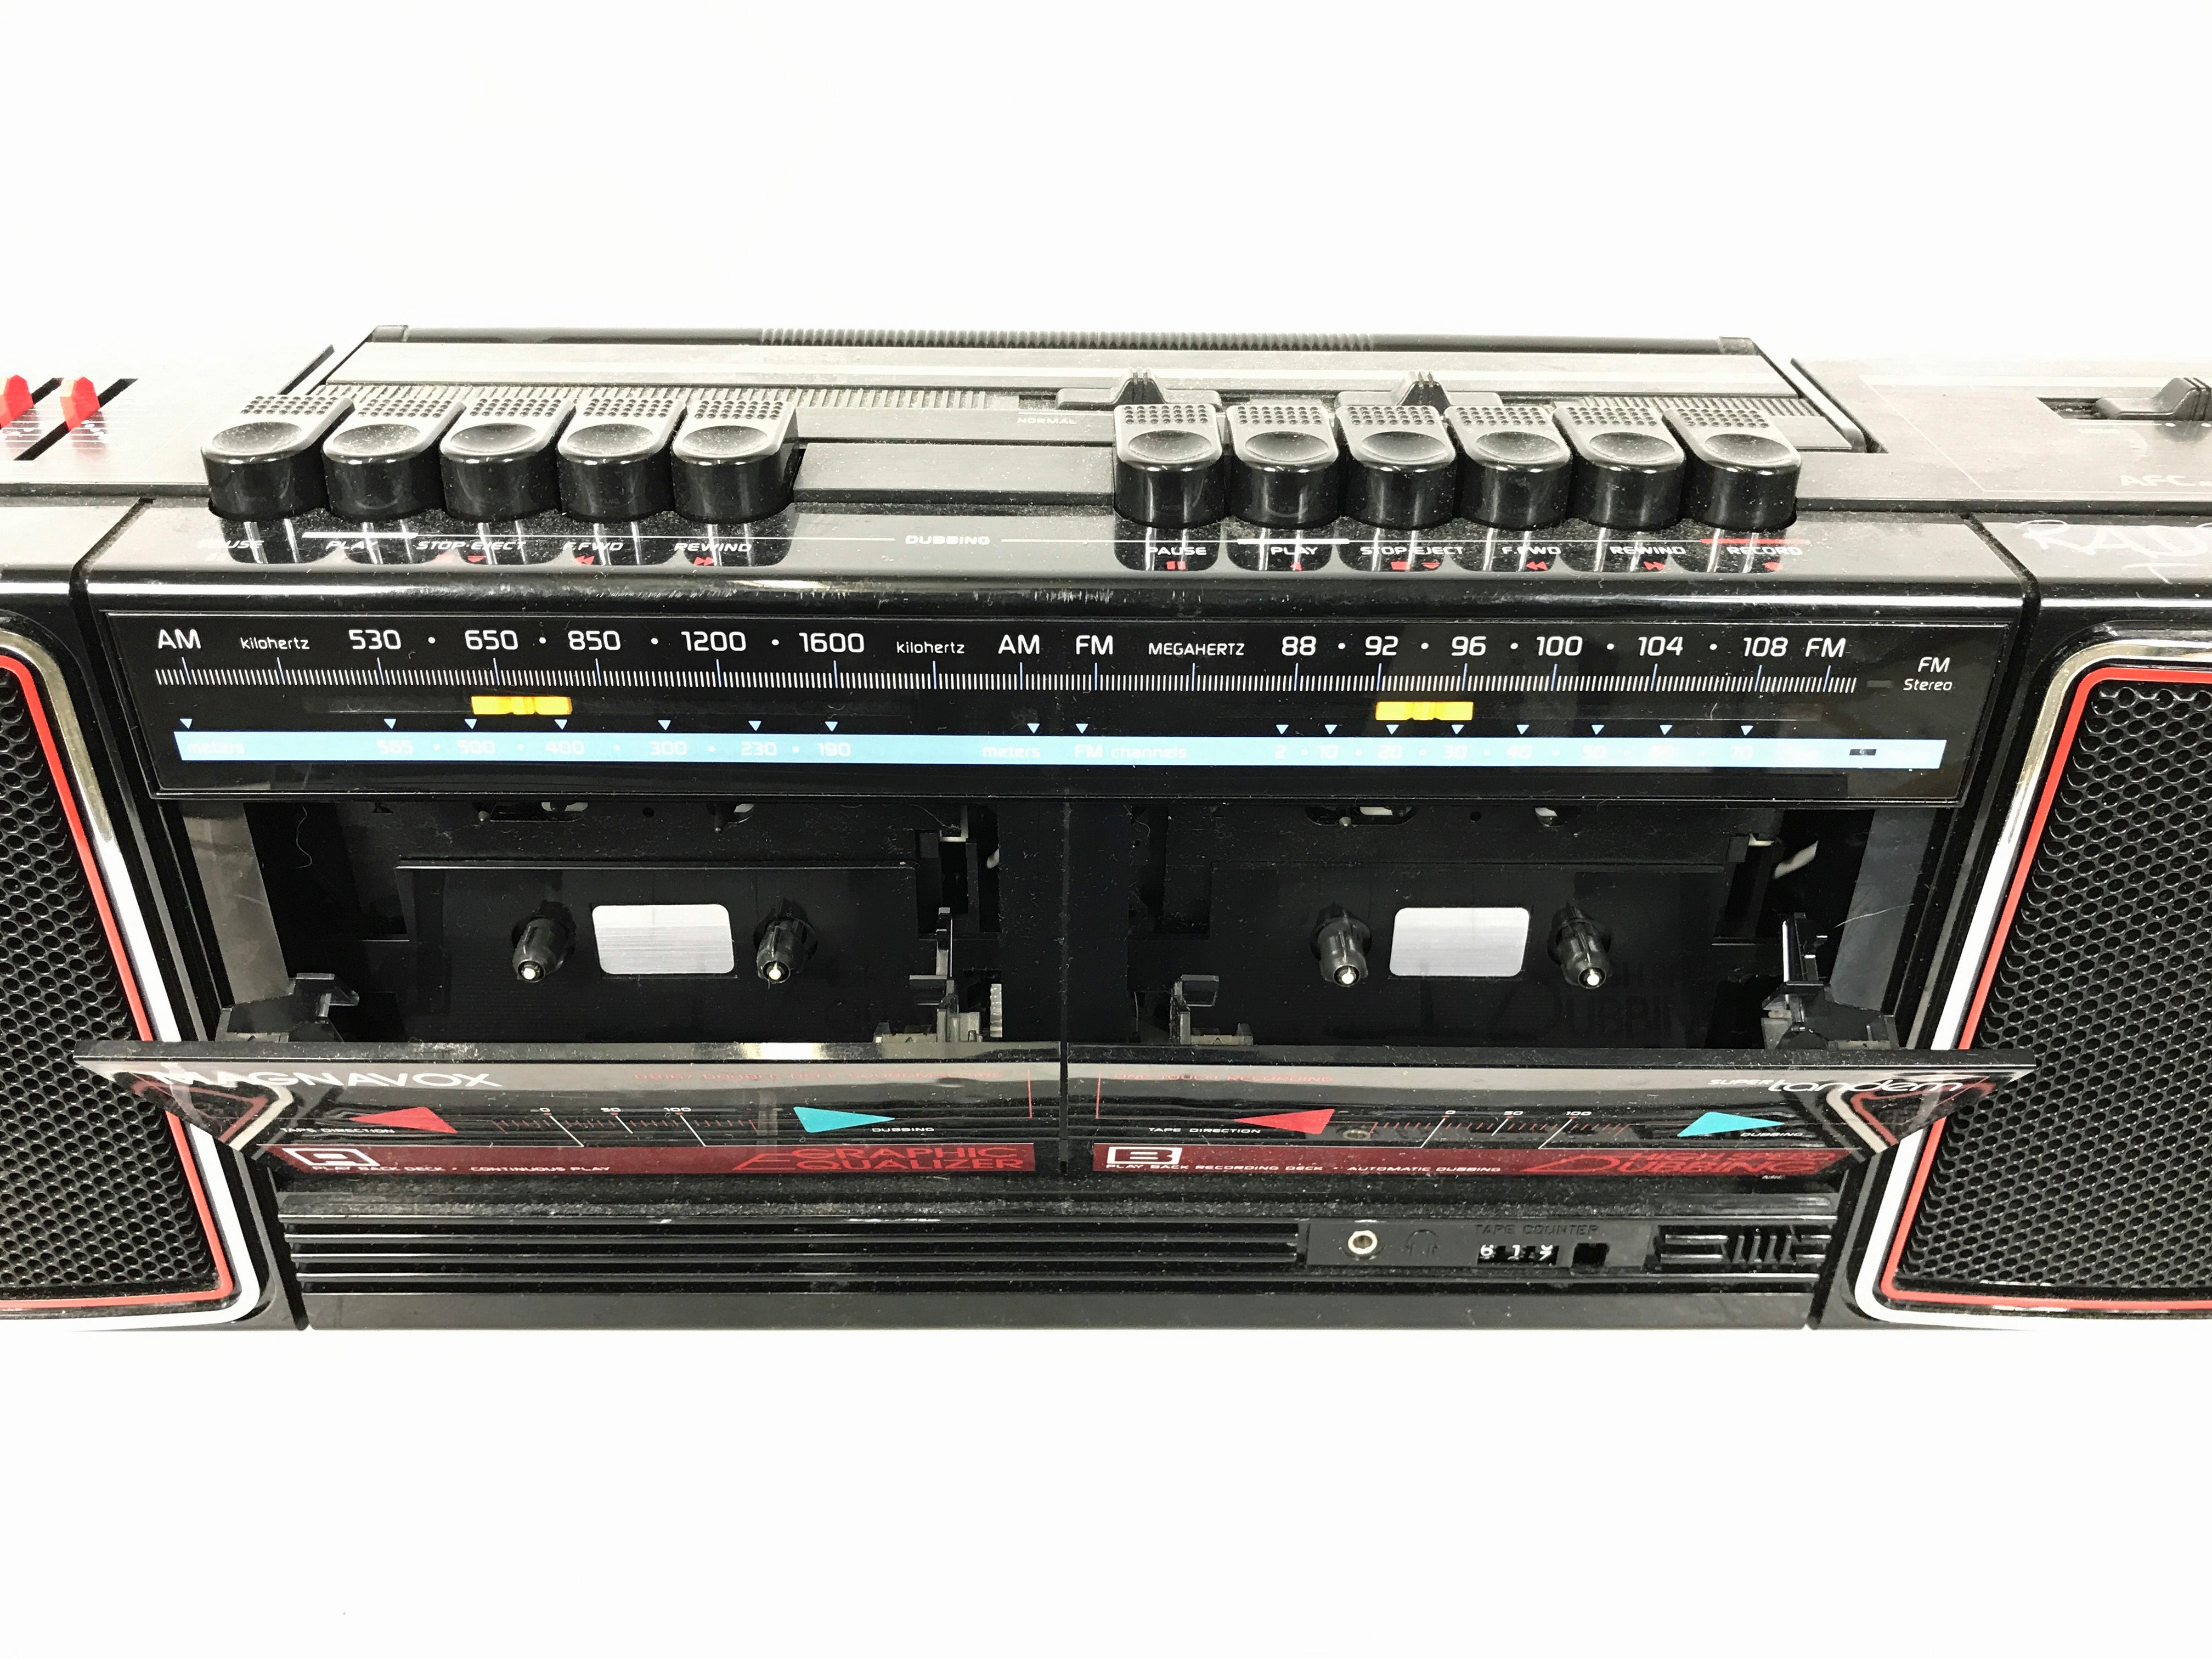 Magnavox 347H Tape Player Radio Boombox *Radio Works, Tape Faulty*